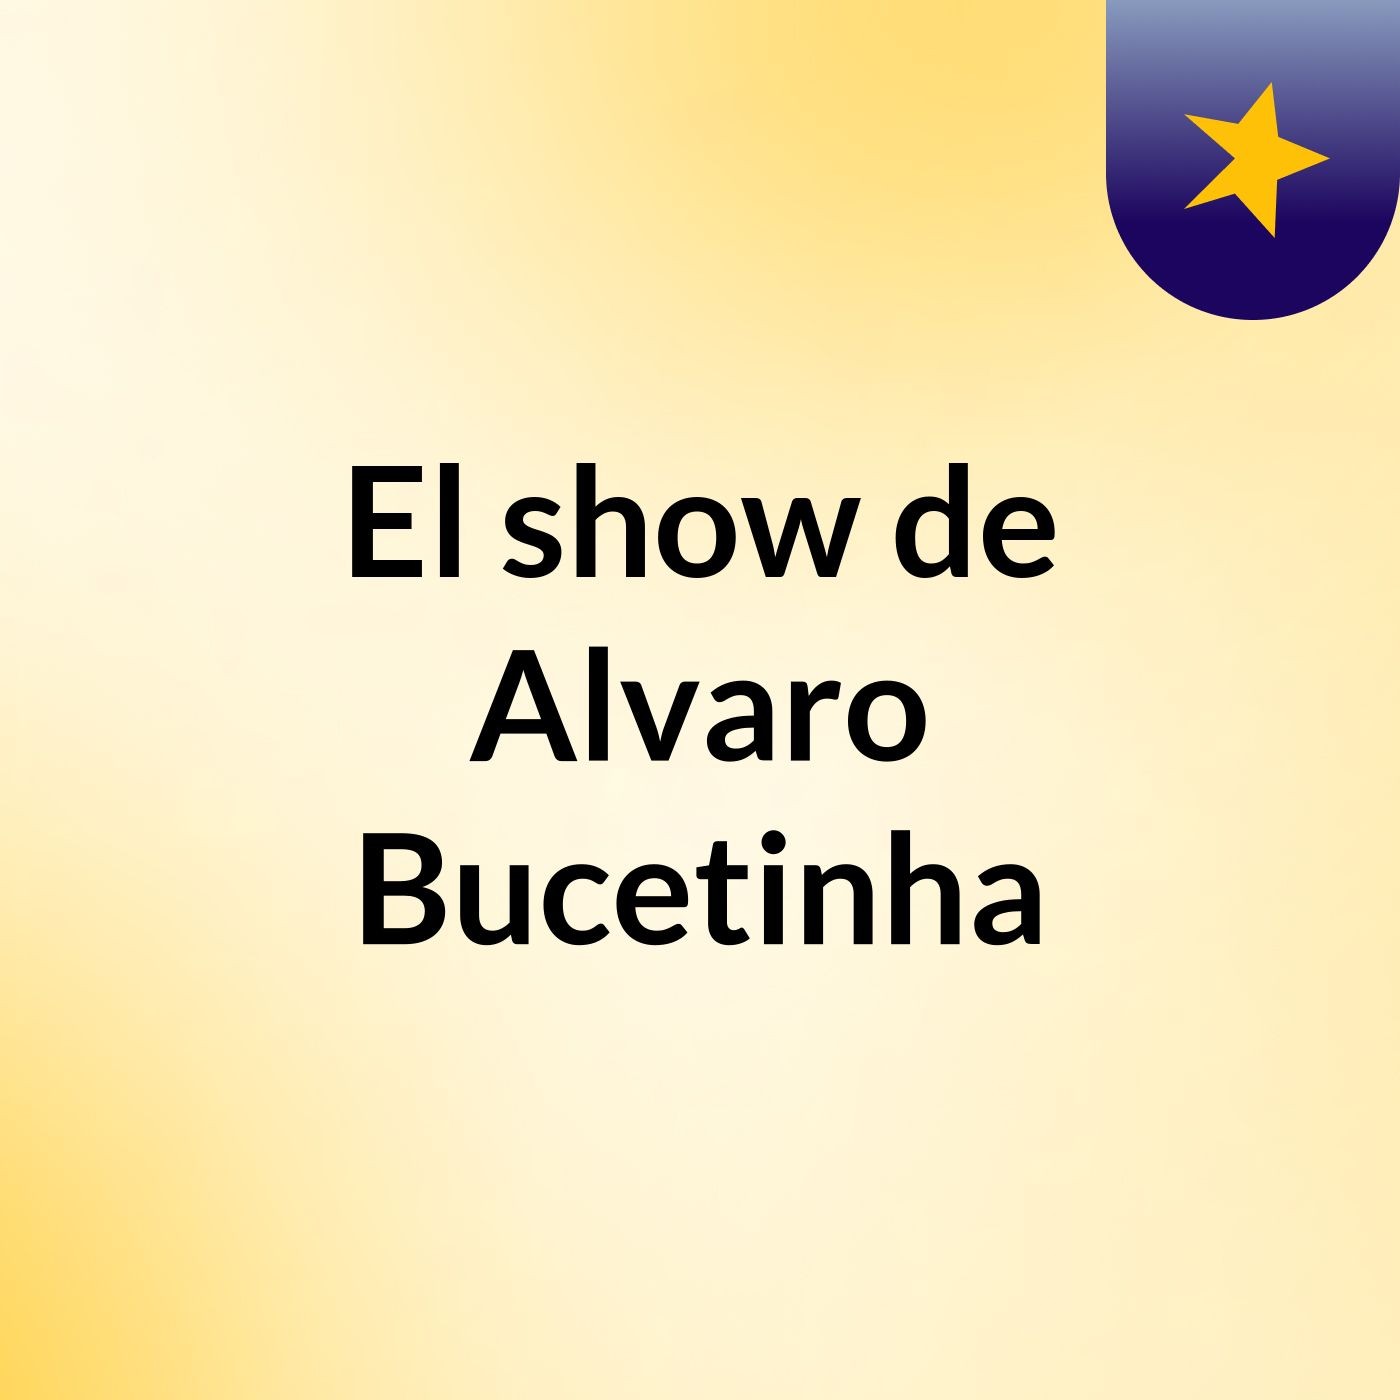 El show de Alvaro Bucetinha